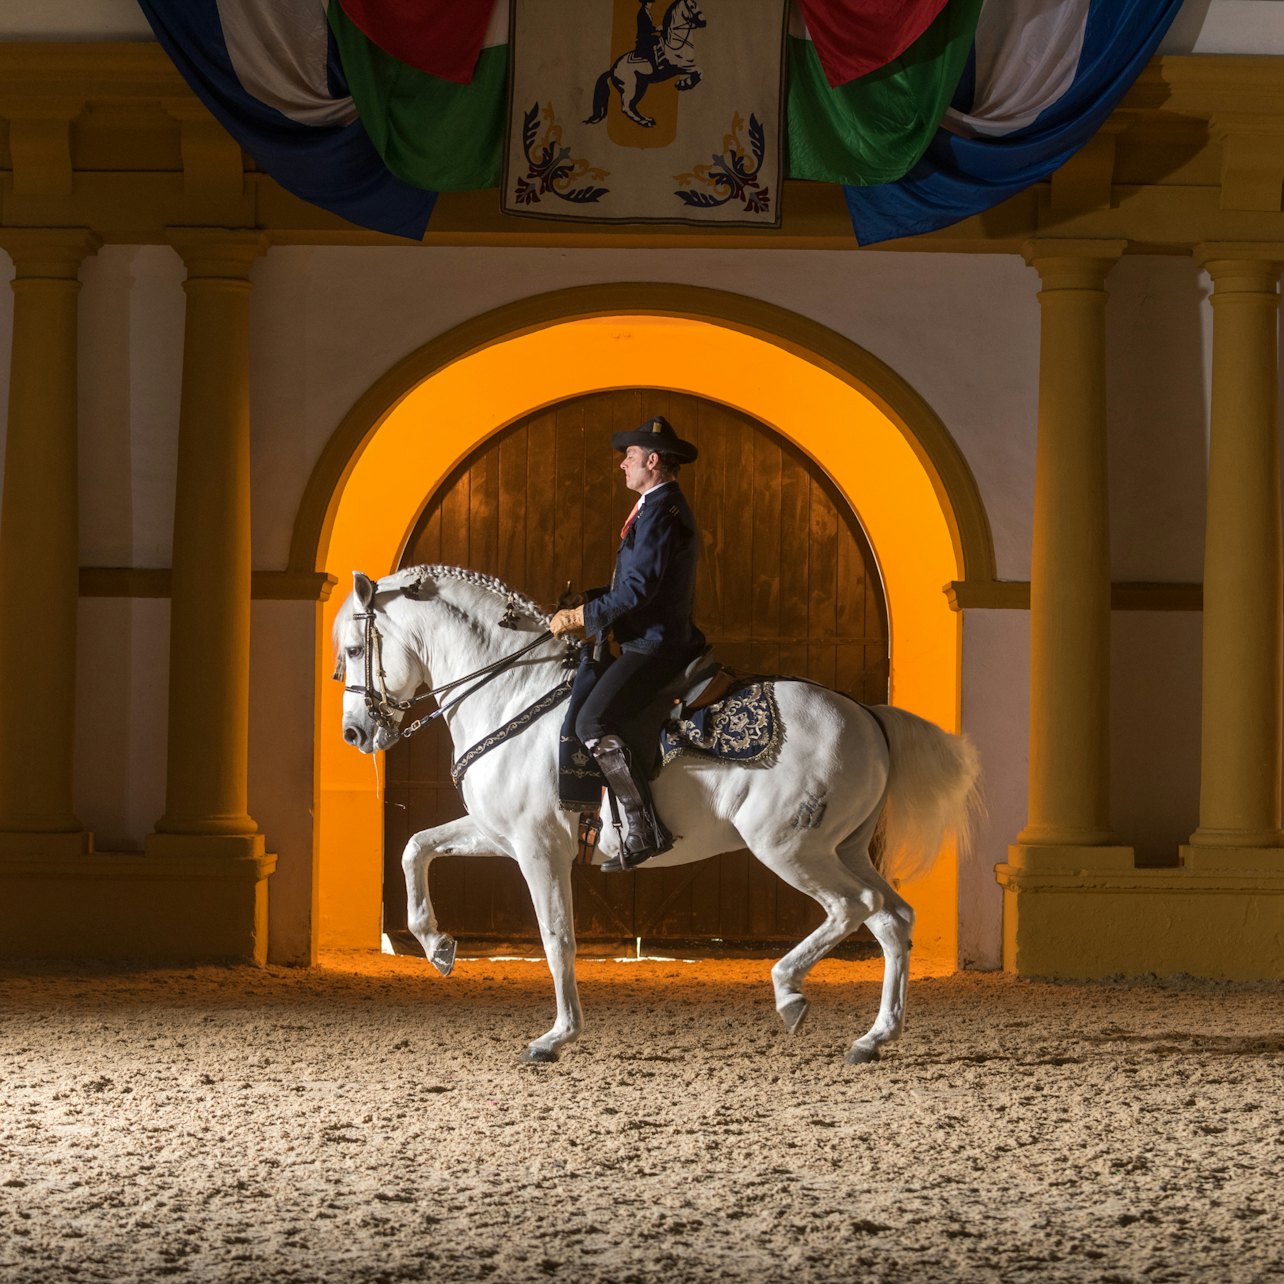 Royal Andalusian School of Equestrian Art: Full Visit - Accommodations in Jerez de la Frontera